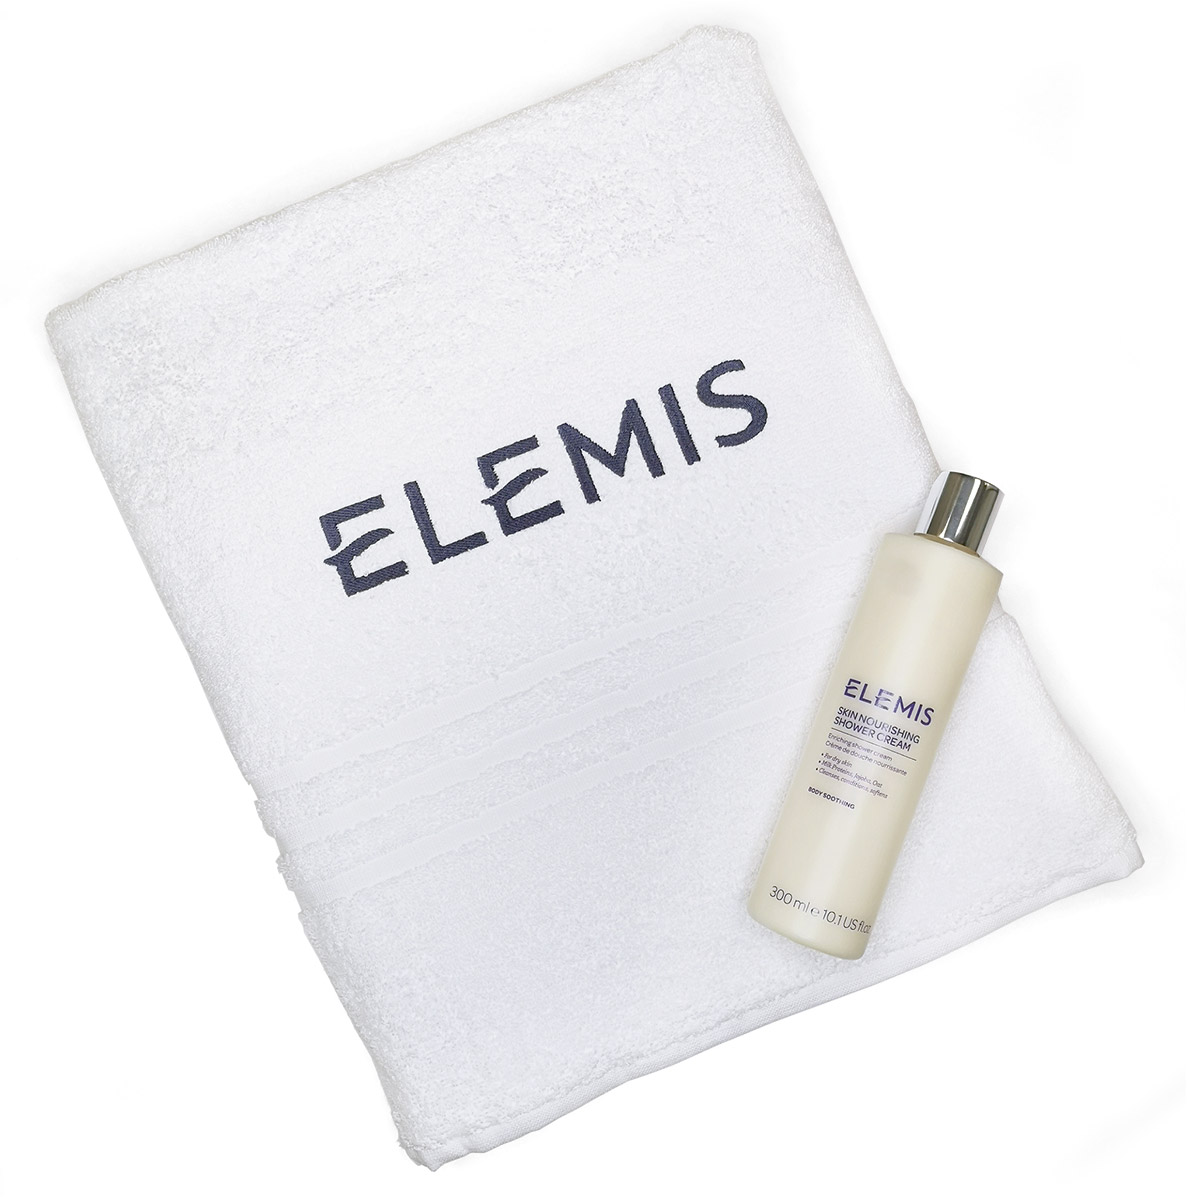 Полотенце брендированное ELEMIS 0